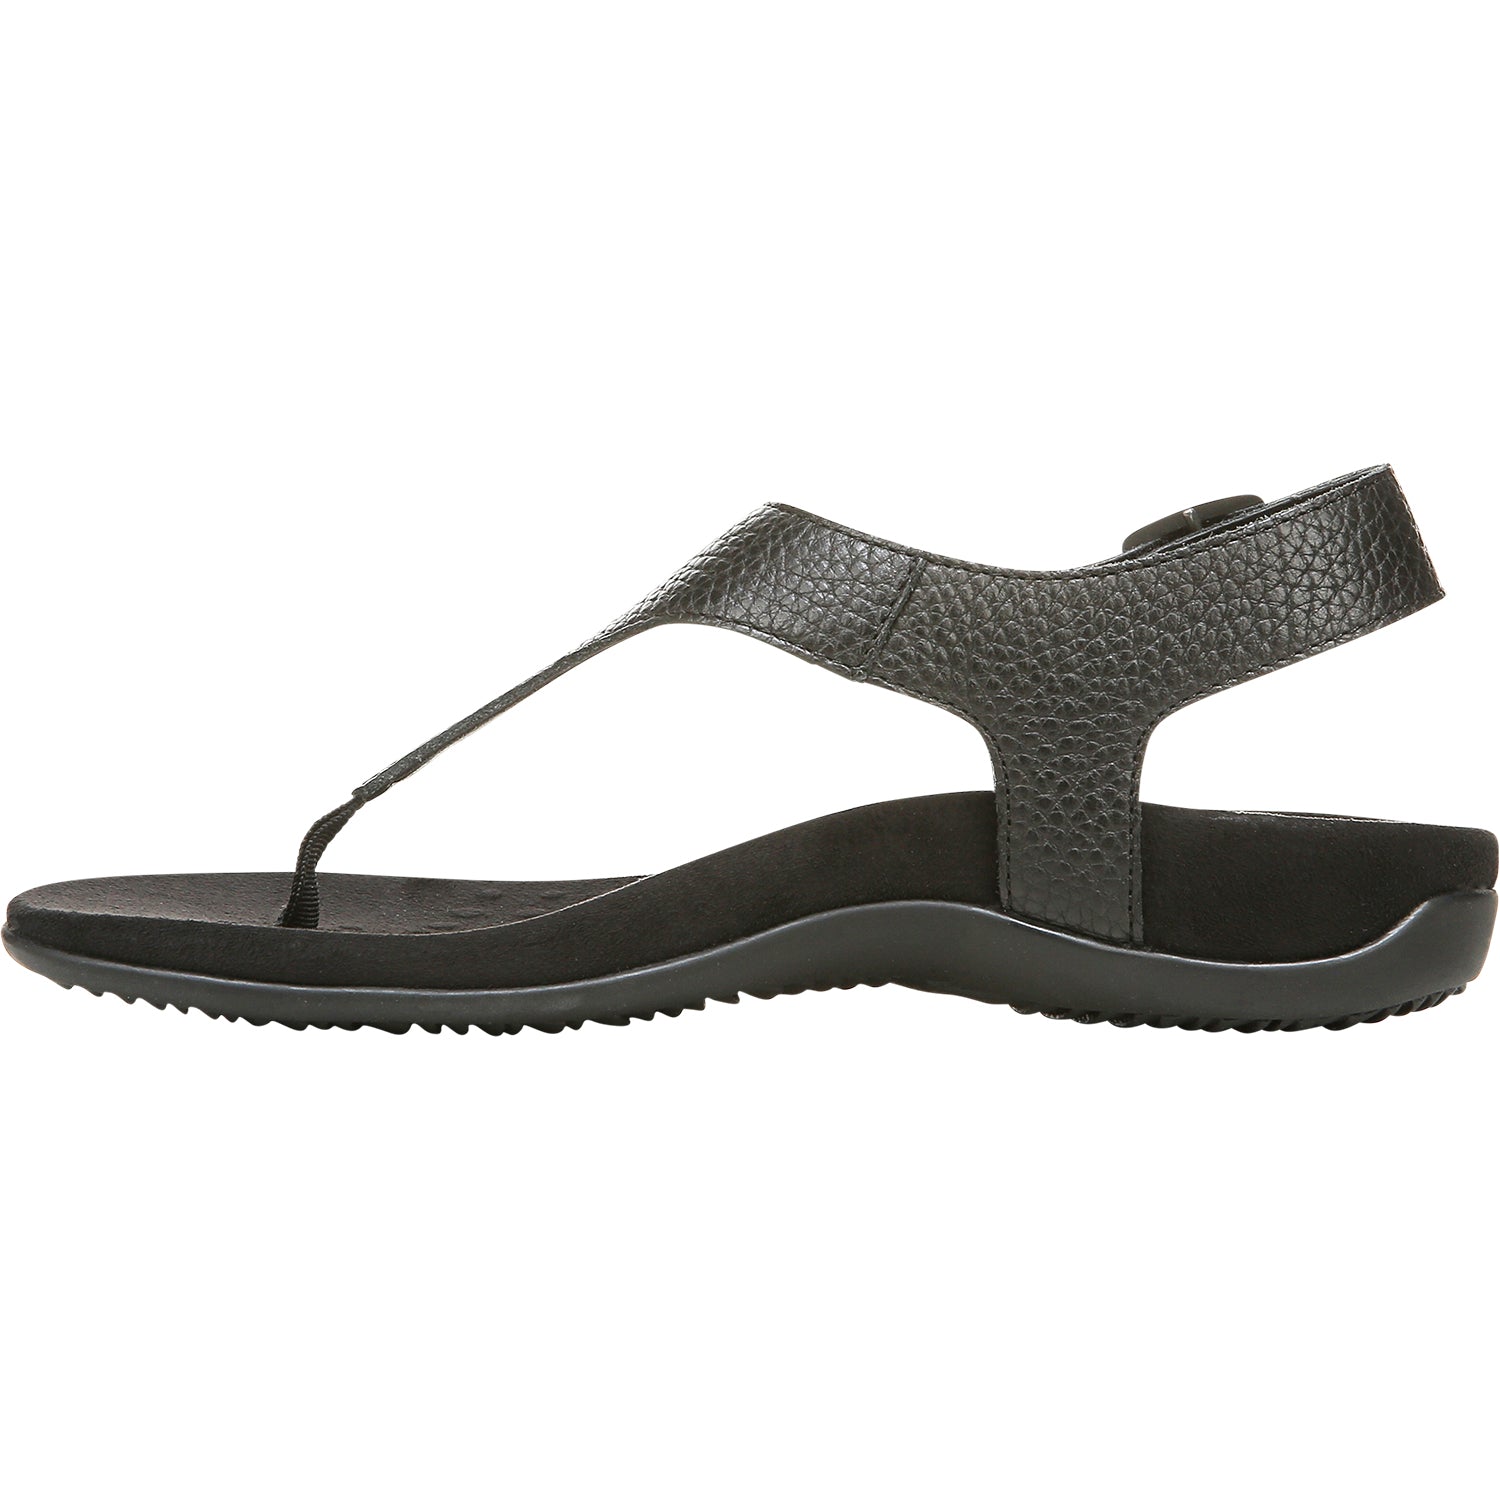 Vionic Terra | Women's Thong Sandals | Footwear etc.